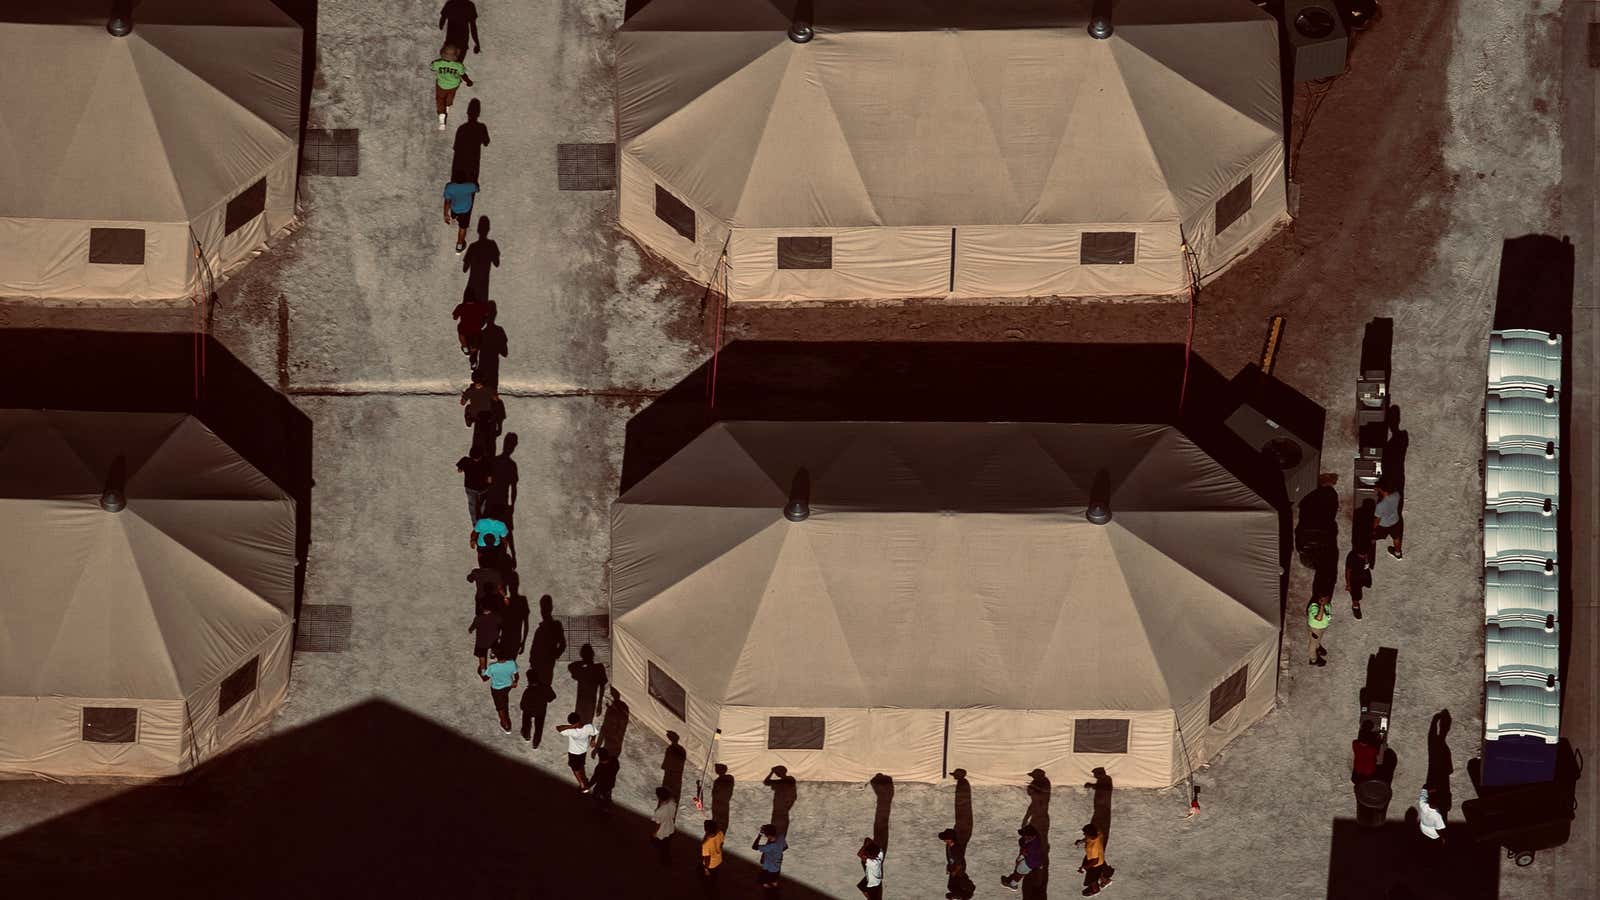 Migrant children walk single file at a detention facility in Texas.